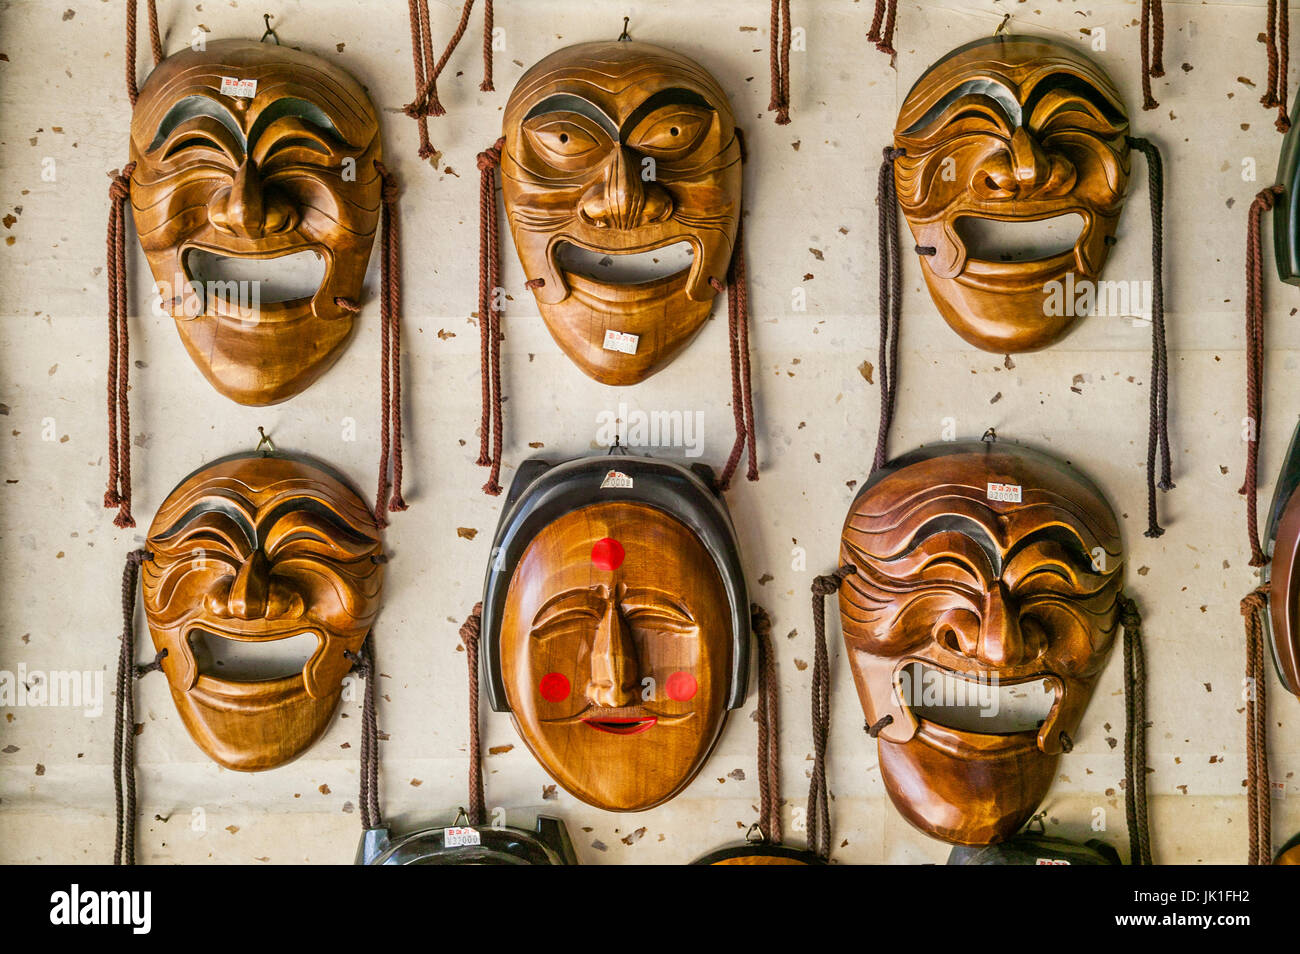 South Korea, Gyeonggi Province, Korean Folk Village, exhibit of Korean masks Stock Photo